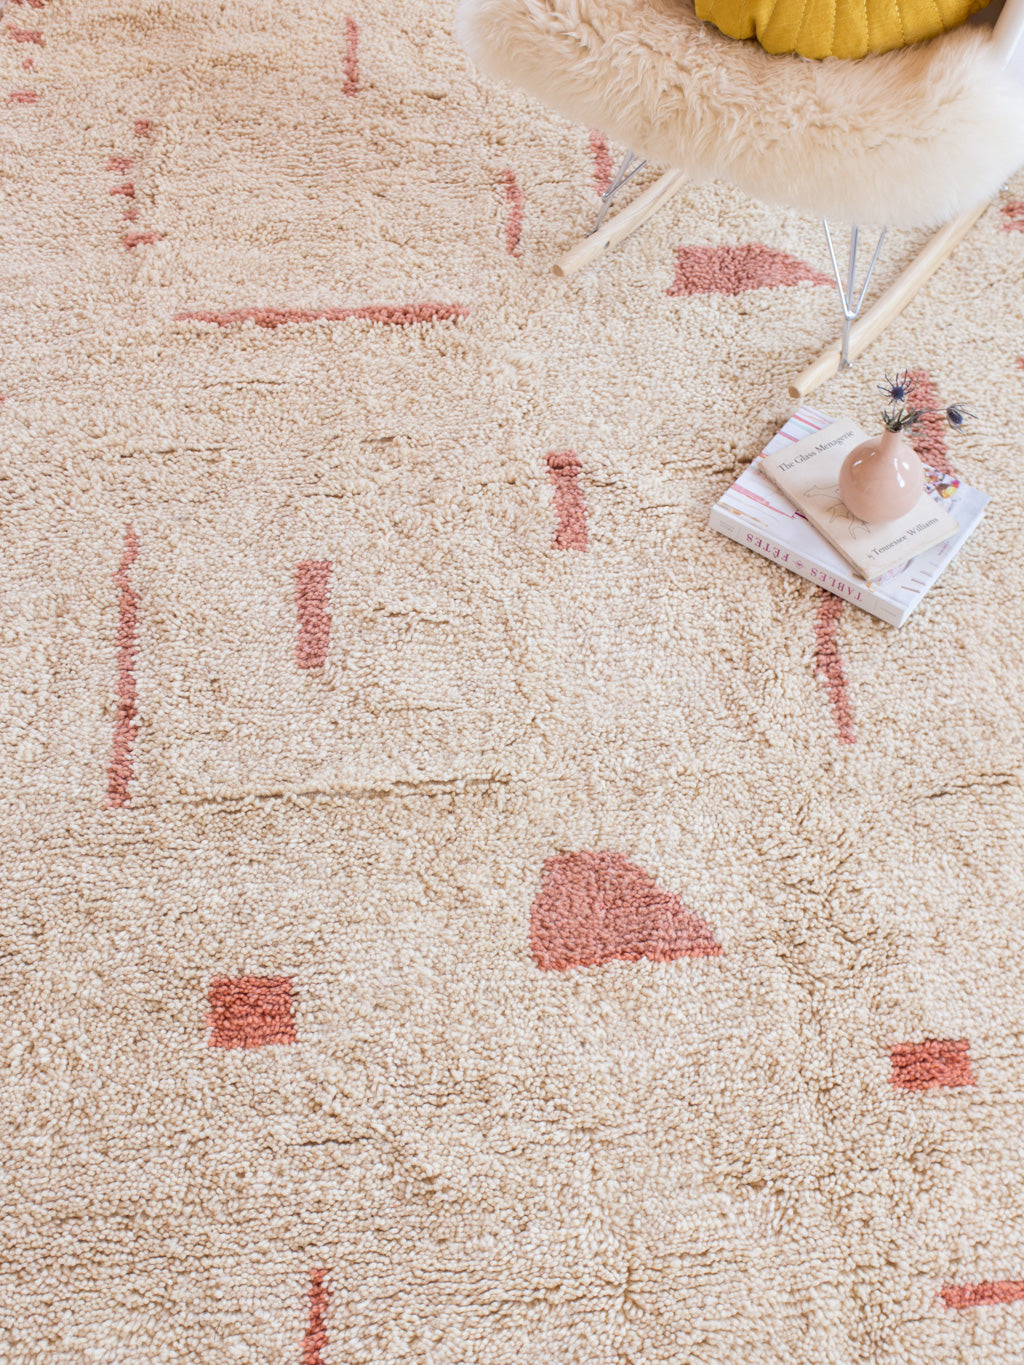 nola shag rug nursery rug cream rug wool rug handcrafted rug ethical rug fare trade artisanal women business